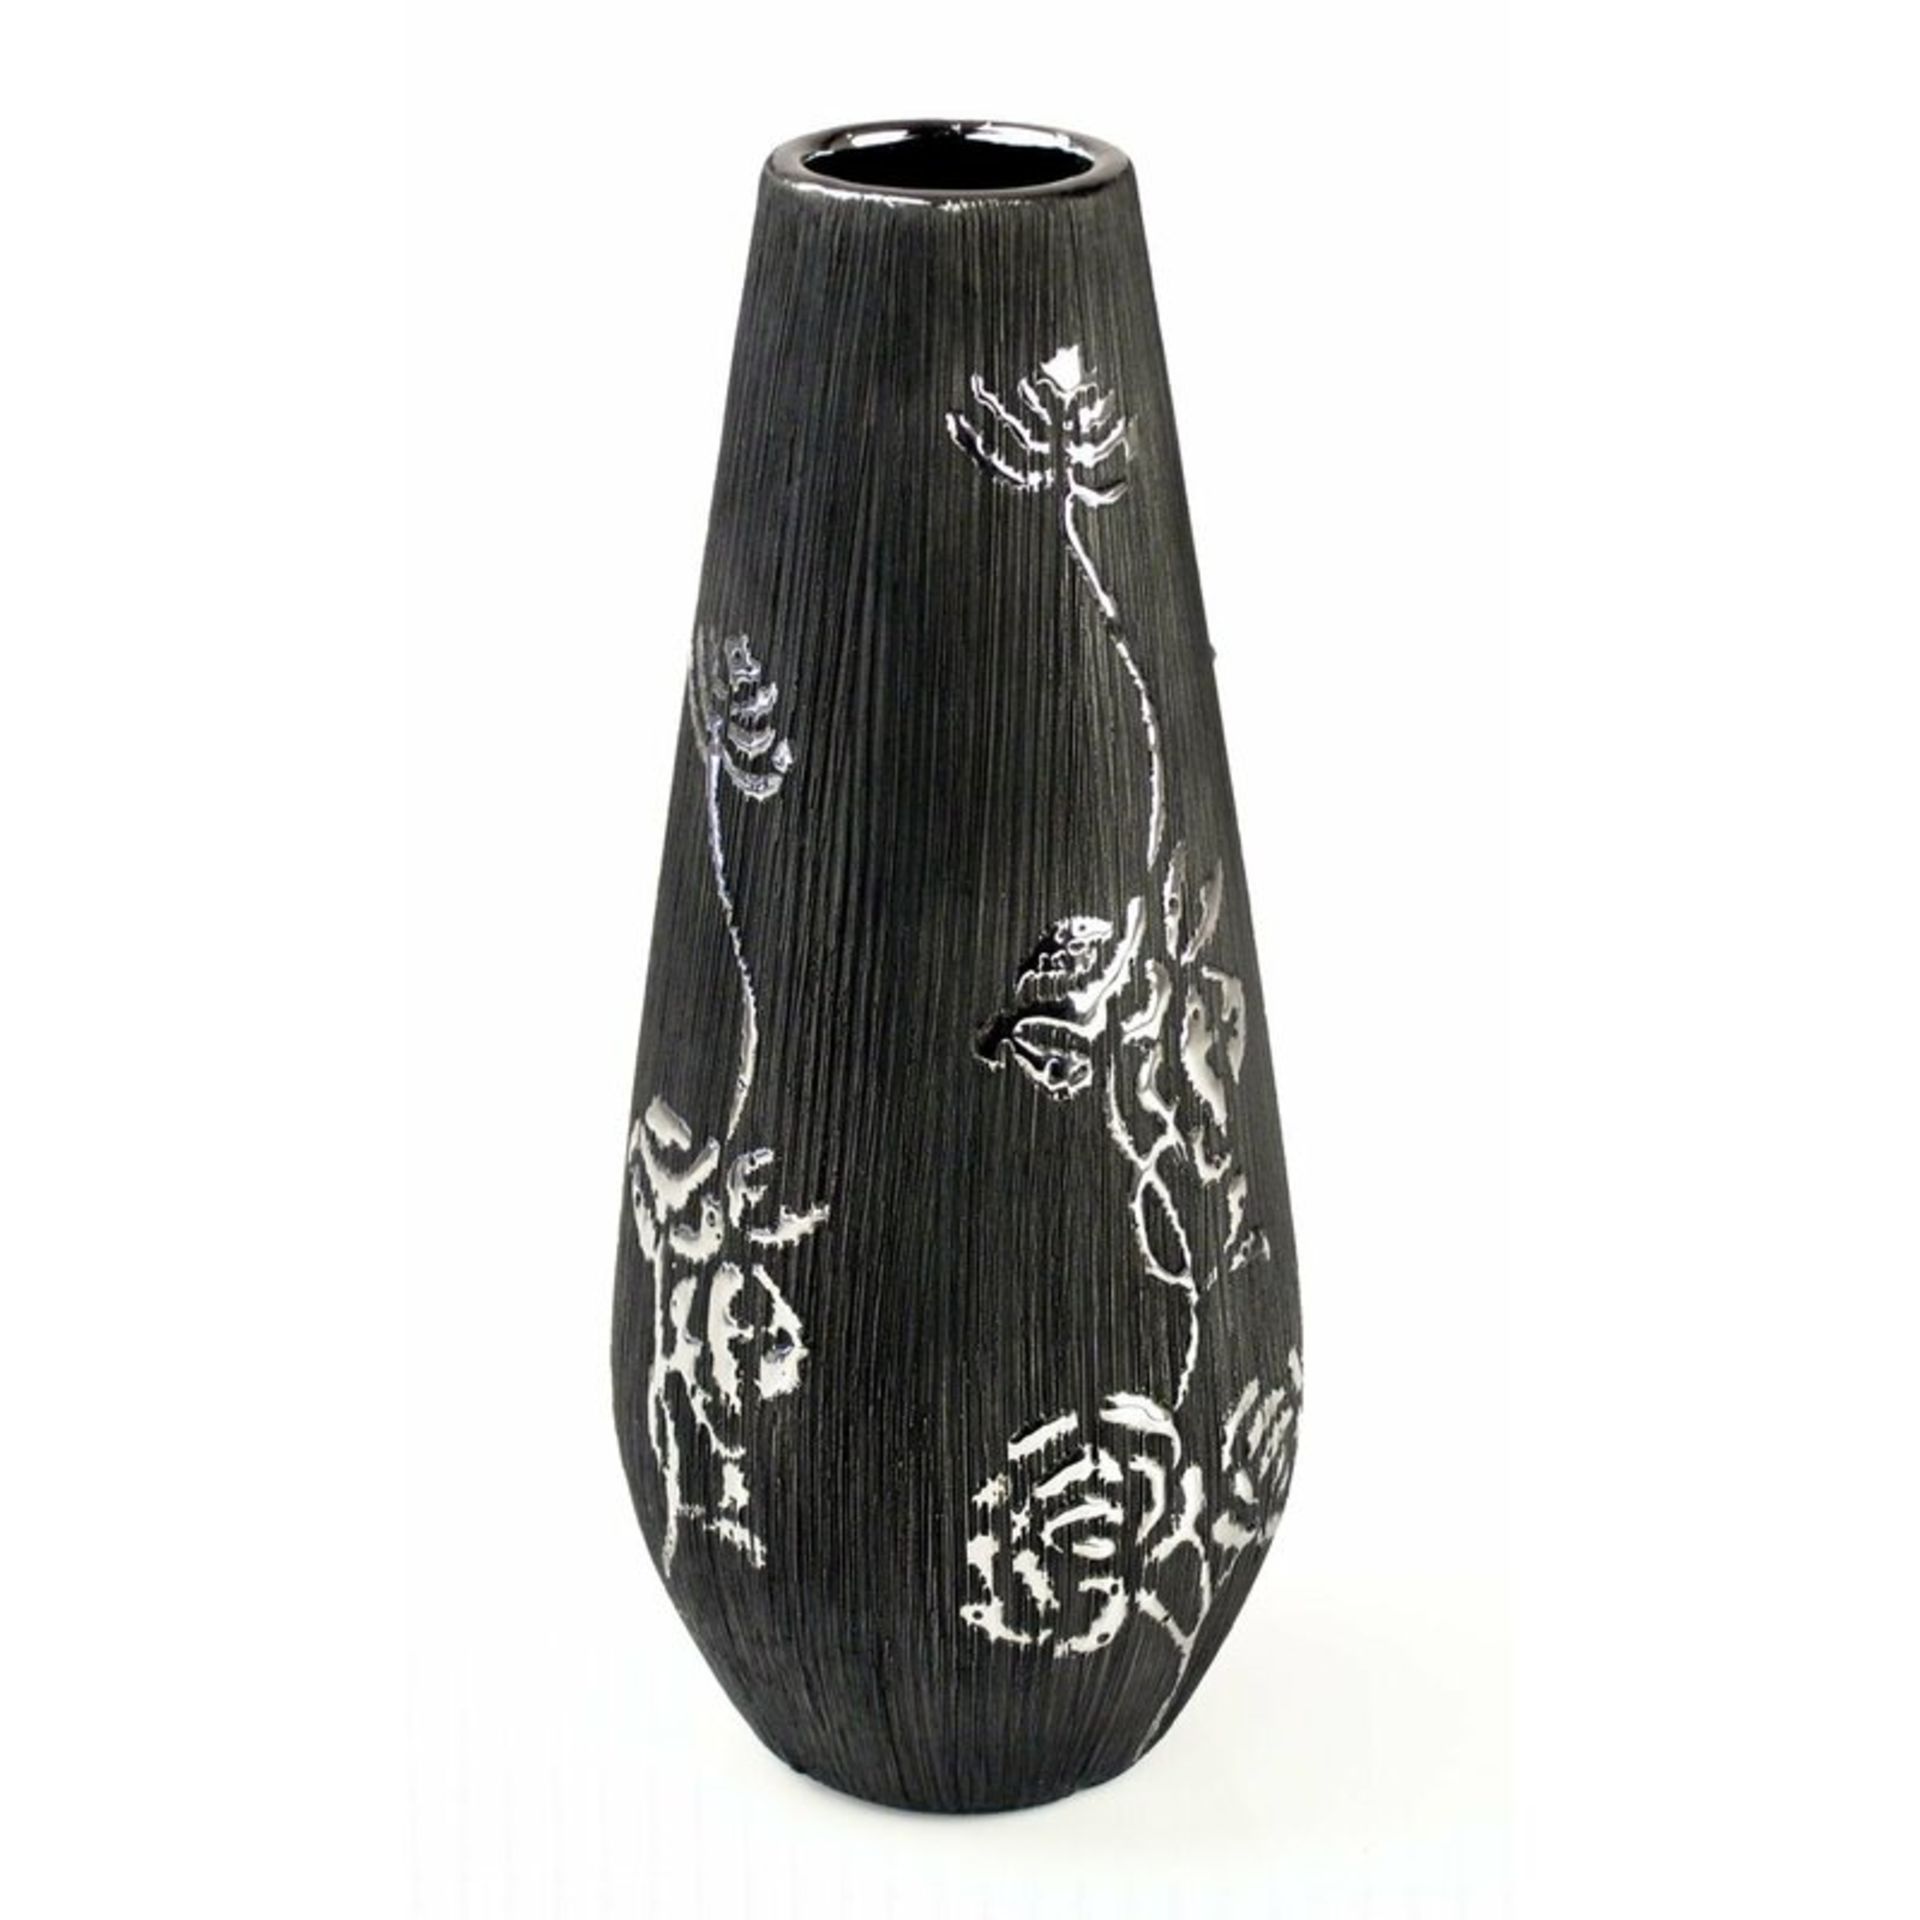 Arden Table Vase - RRP £54.99